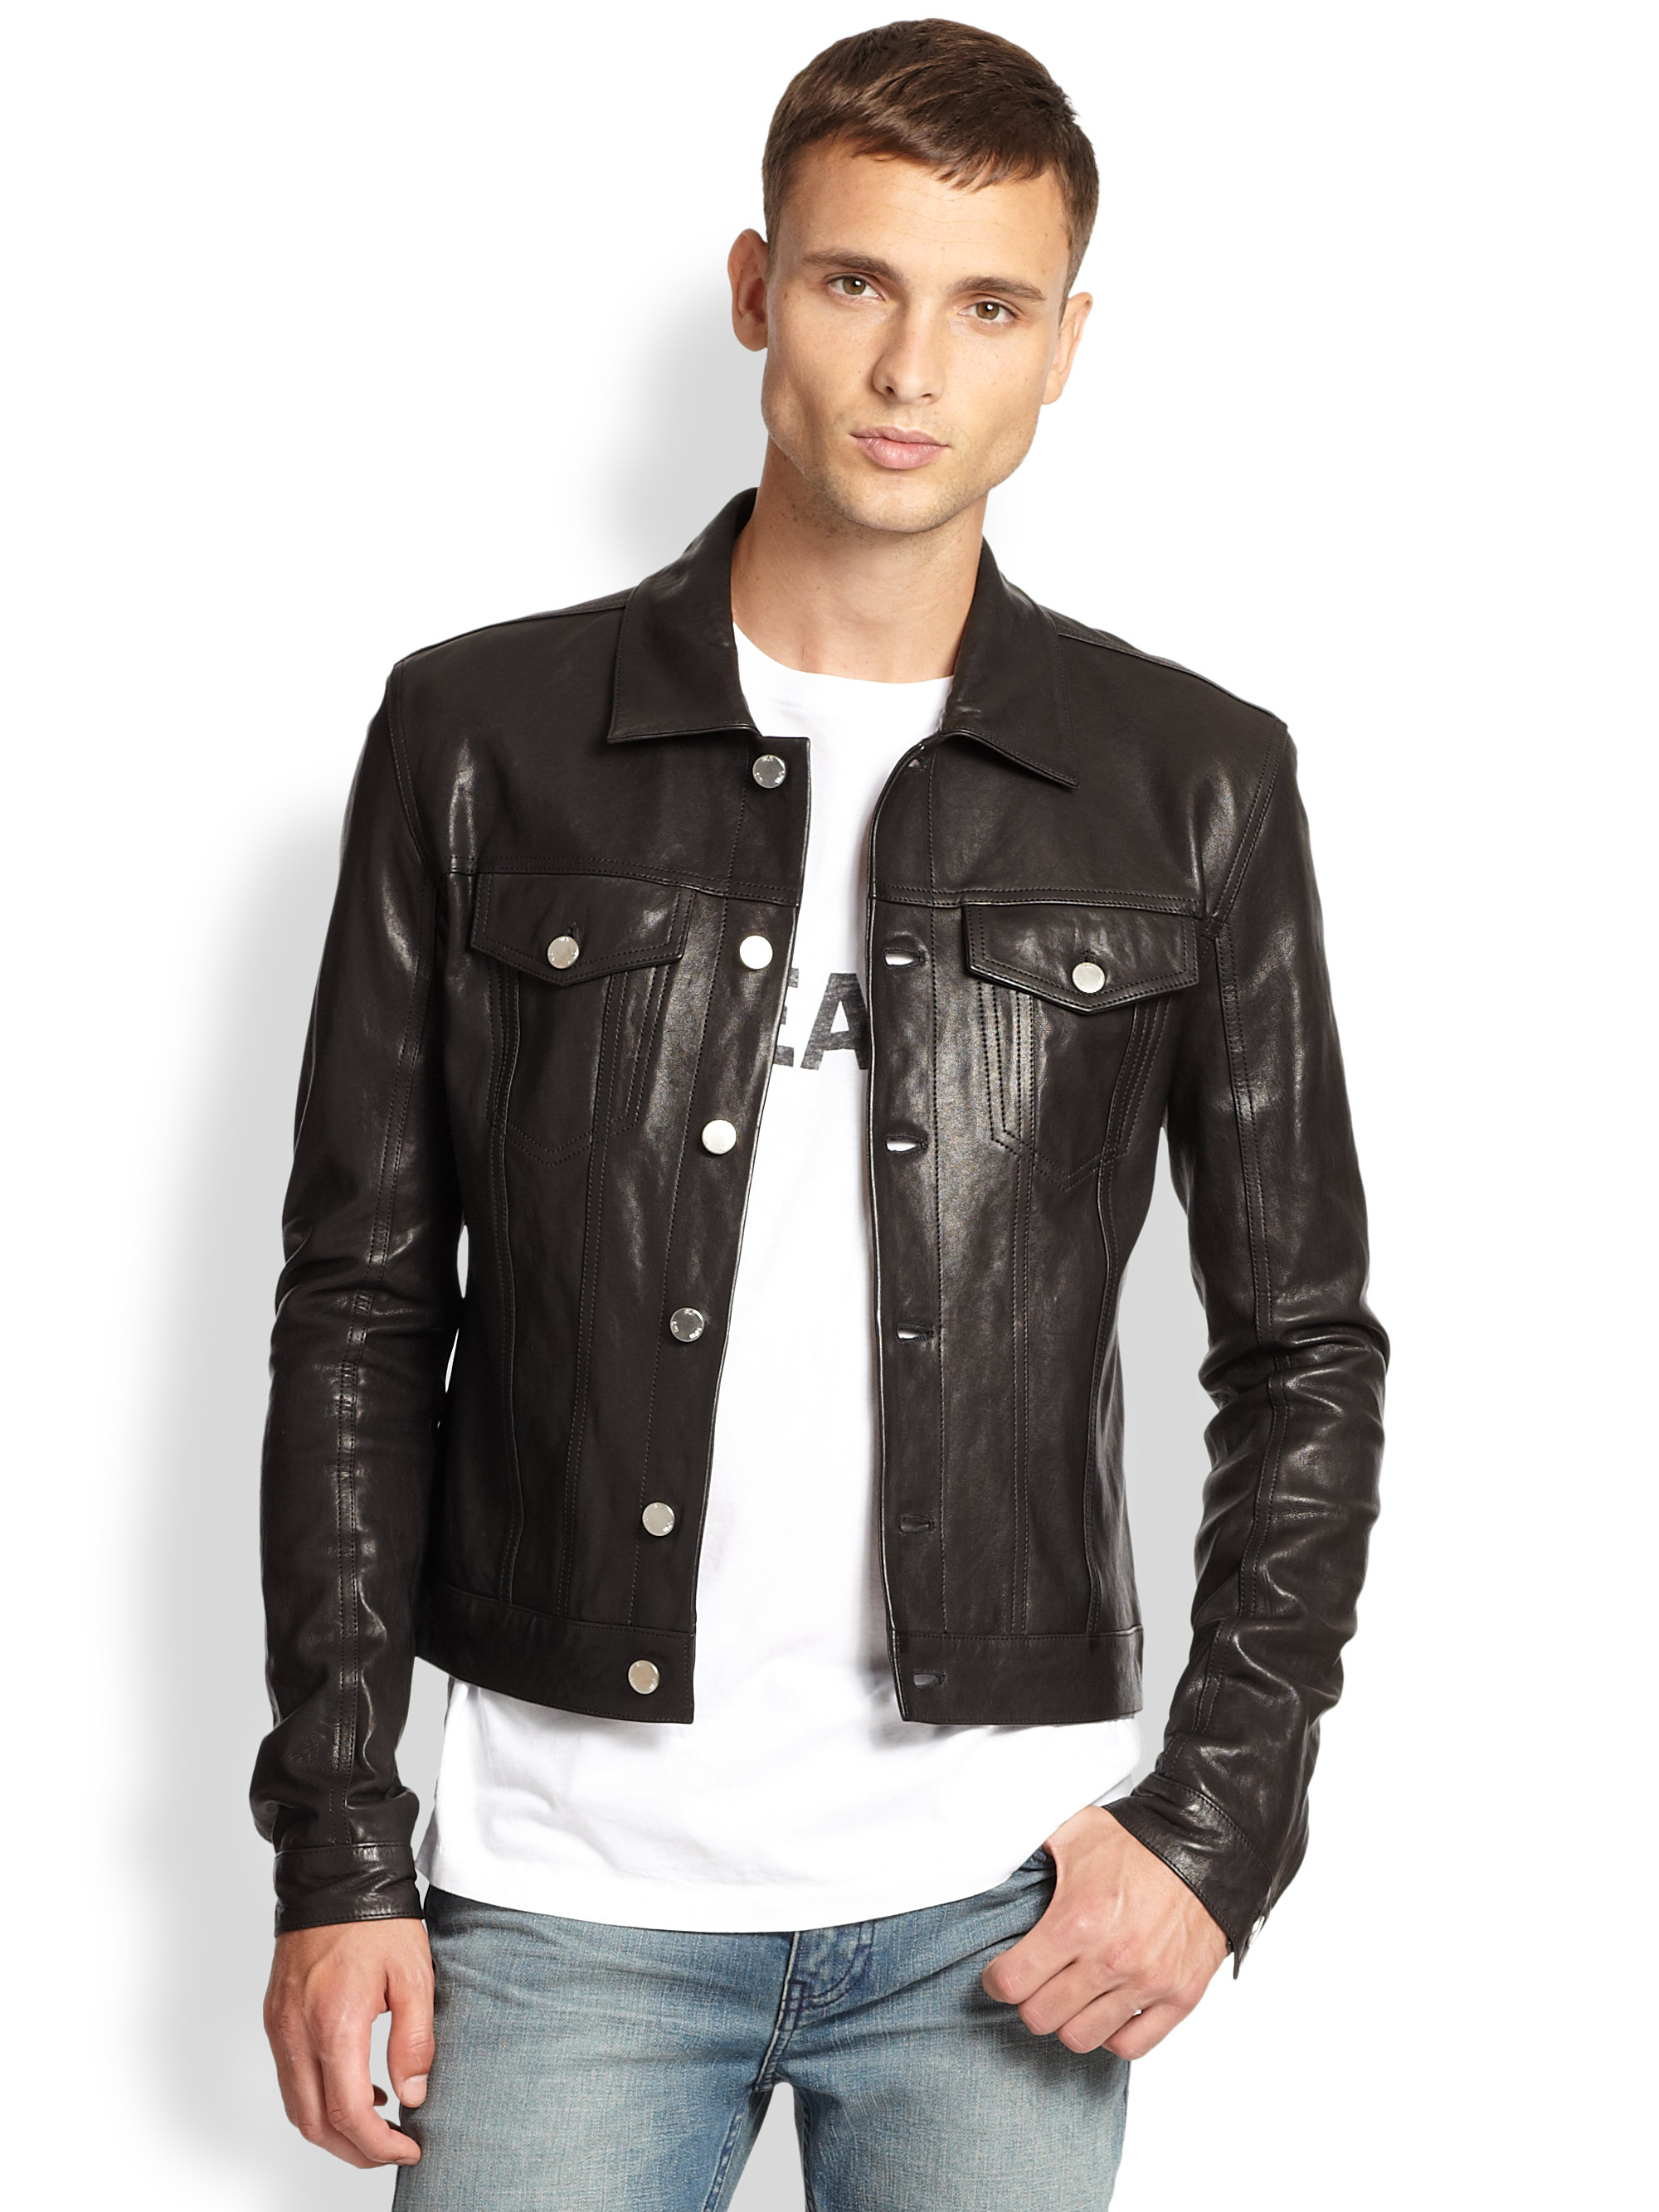 BLK DNM Leather Jacket in Black for Men - Lyst